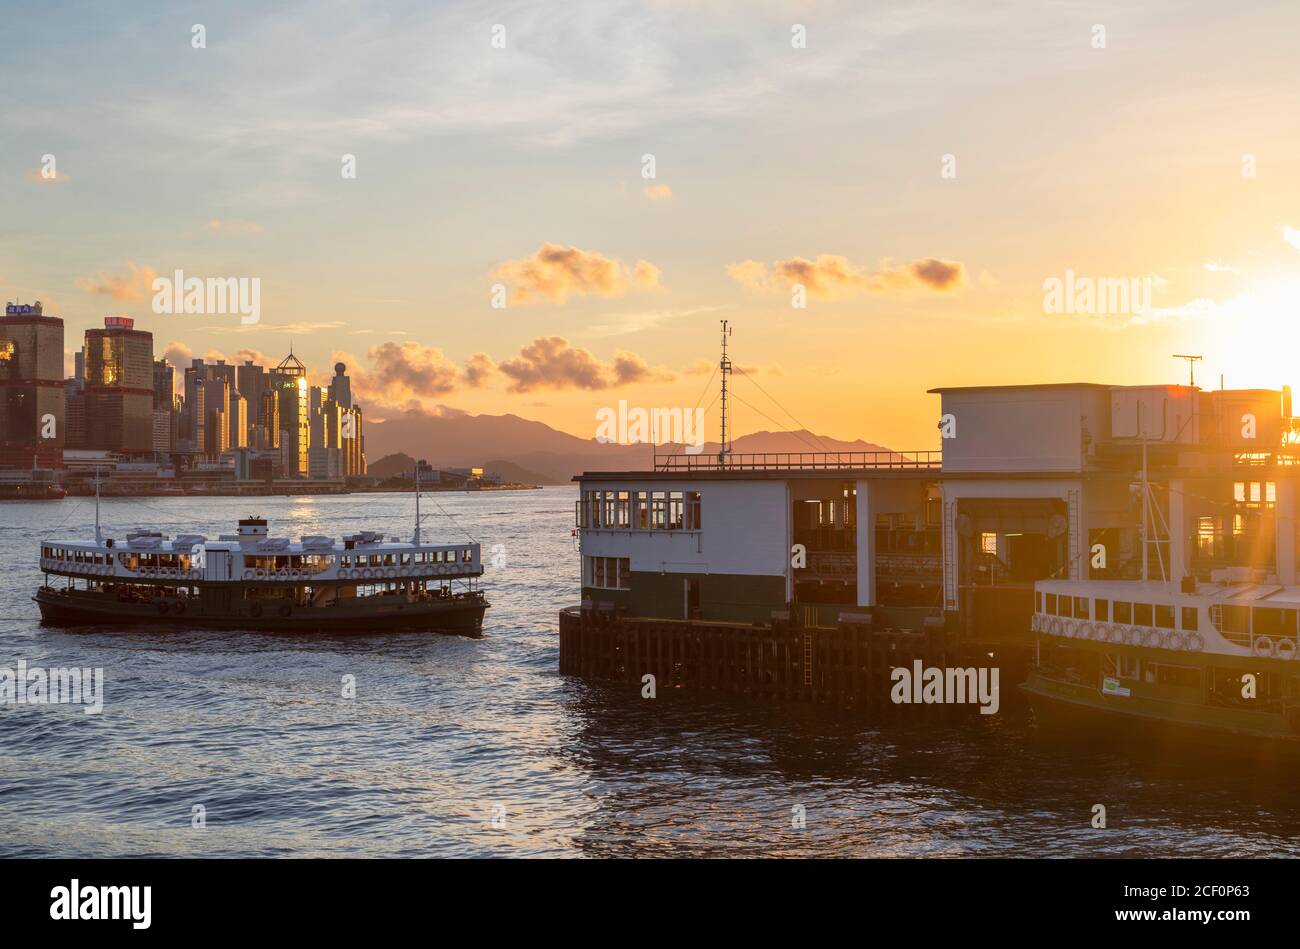 Star Ferry nähert sich dem Star Ferry Pier bei Sonnenuntergang, Tsim Sha Tsui, Kowloon, Hongkong Stockfoto